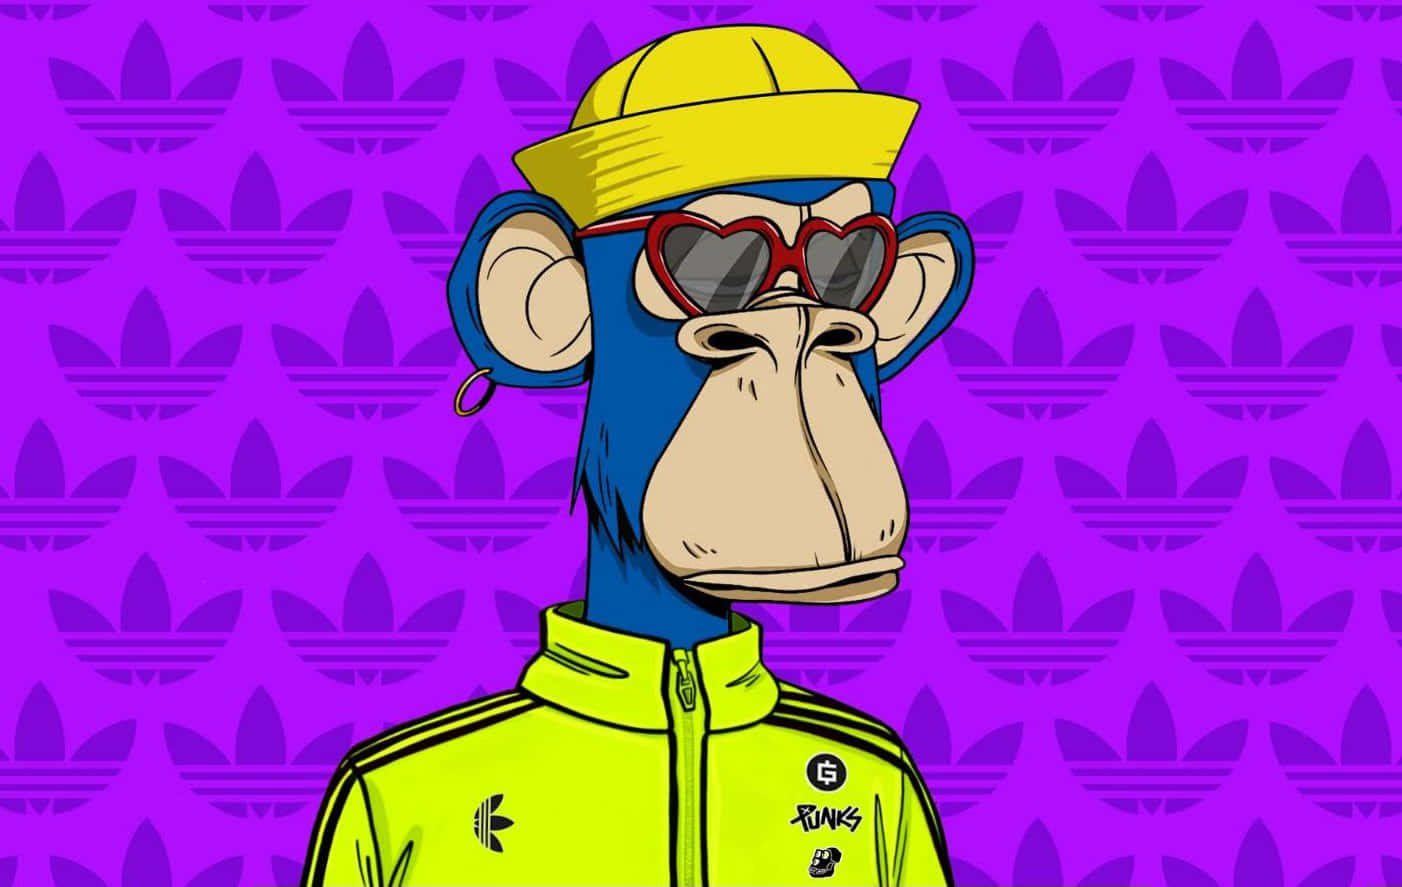 Fun Digital Artwork With Nft Monkey Wallpaper